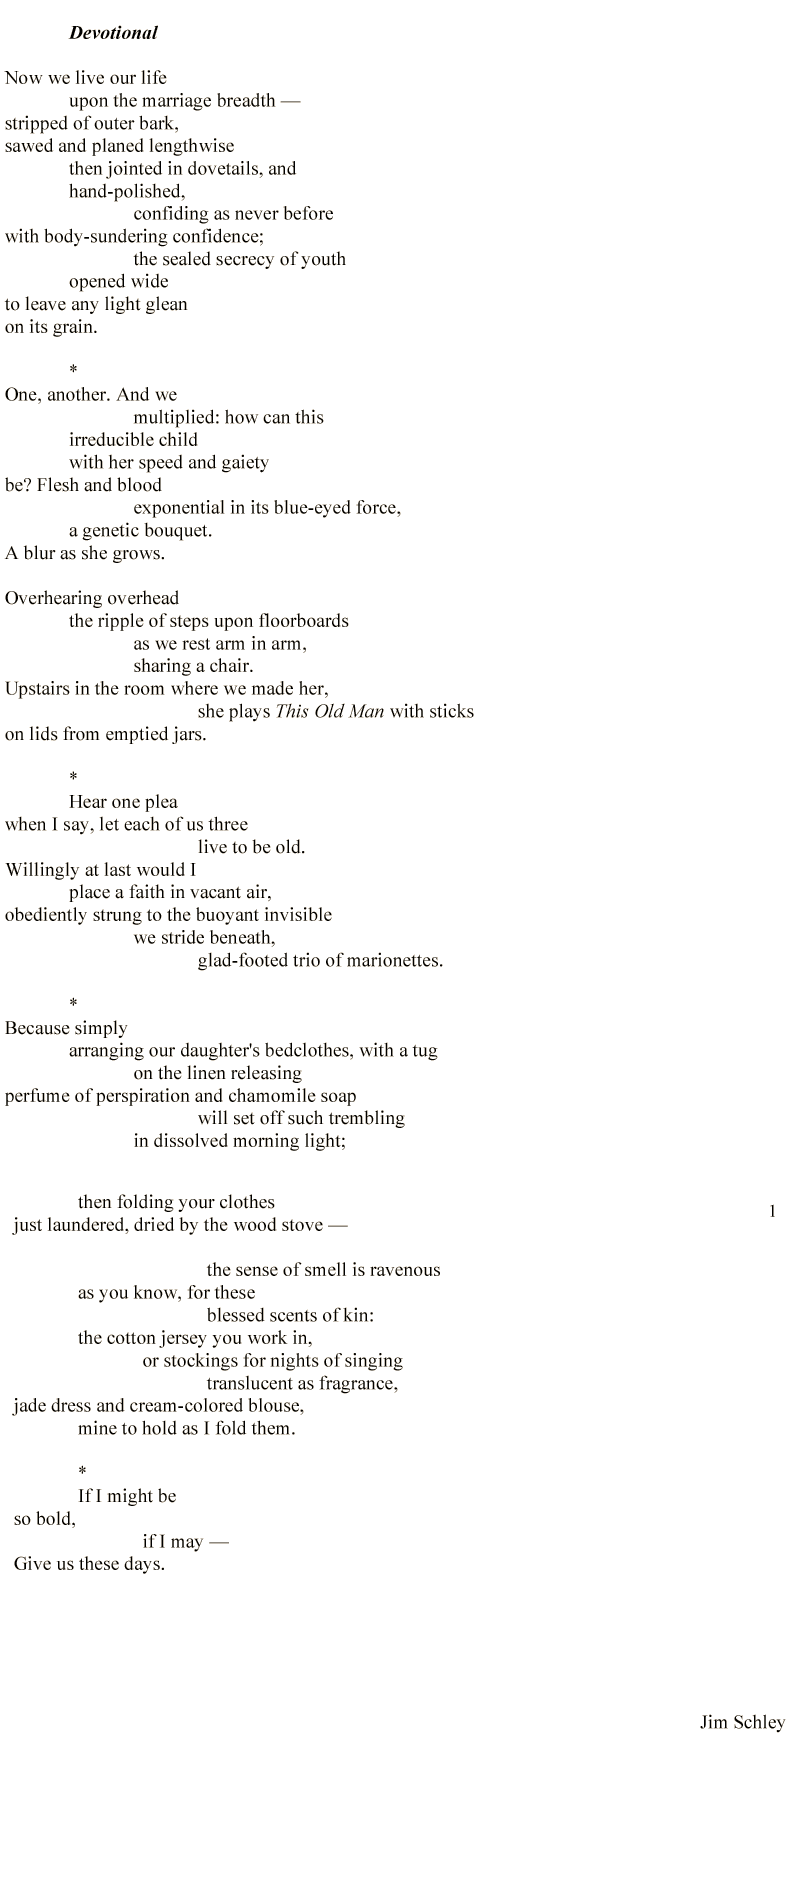 poem by jim schley -- Devotional